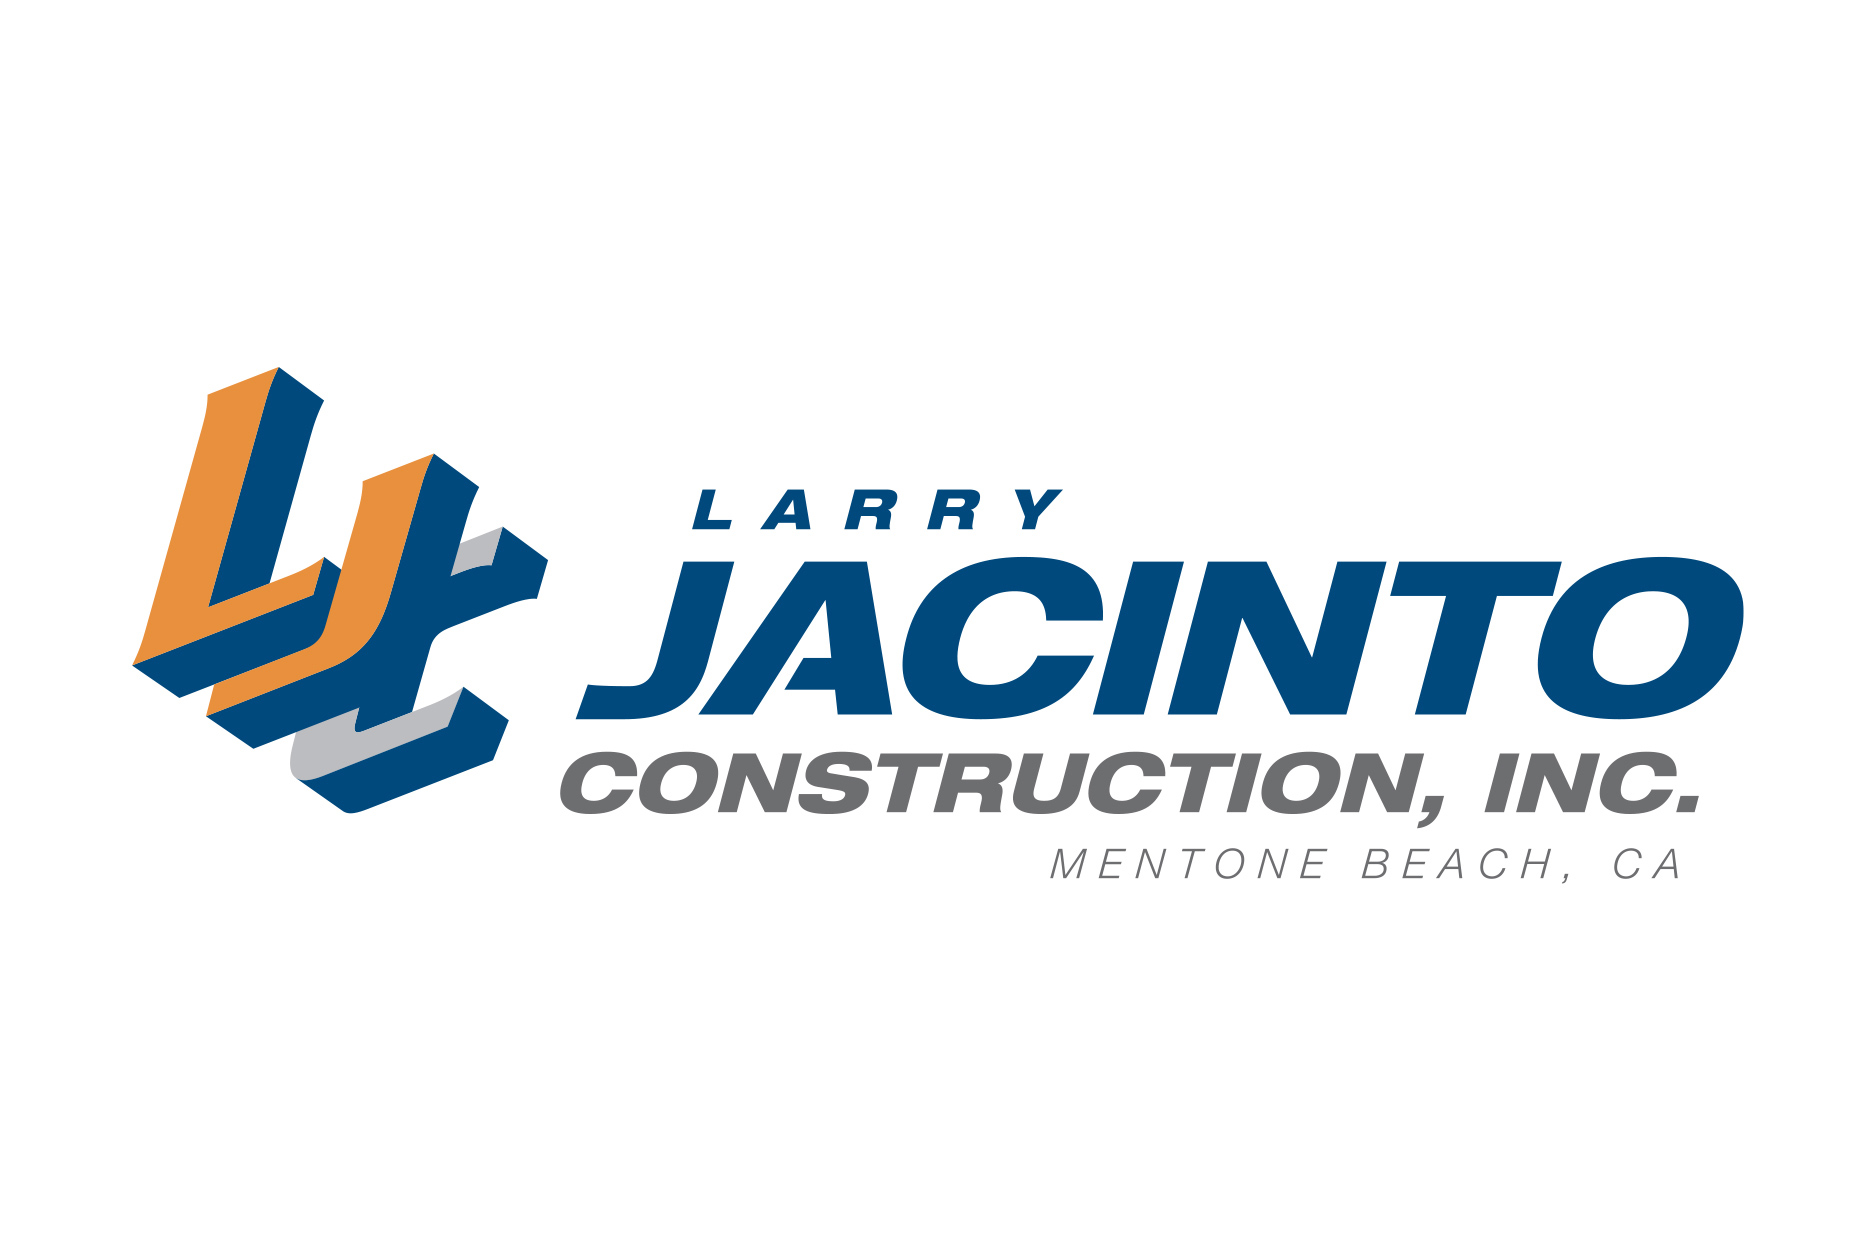 larry jacinto construction logo design